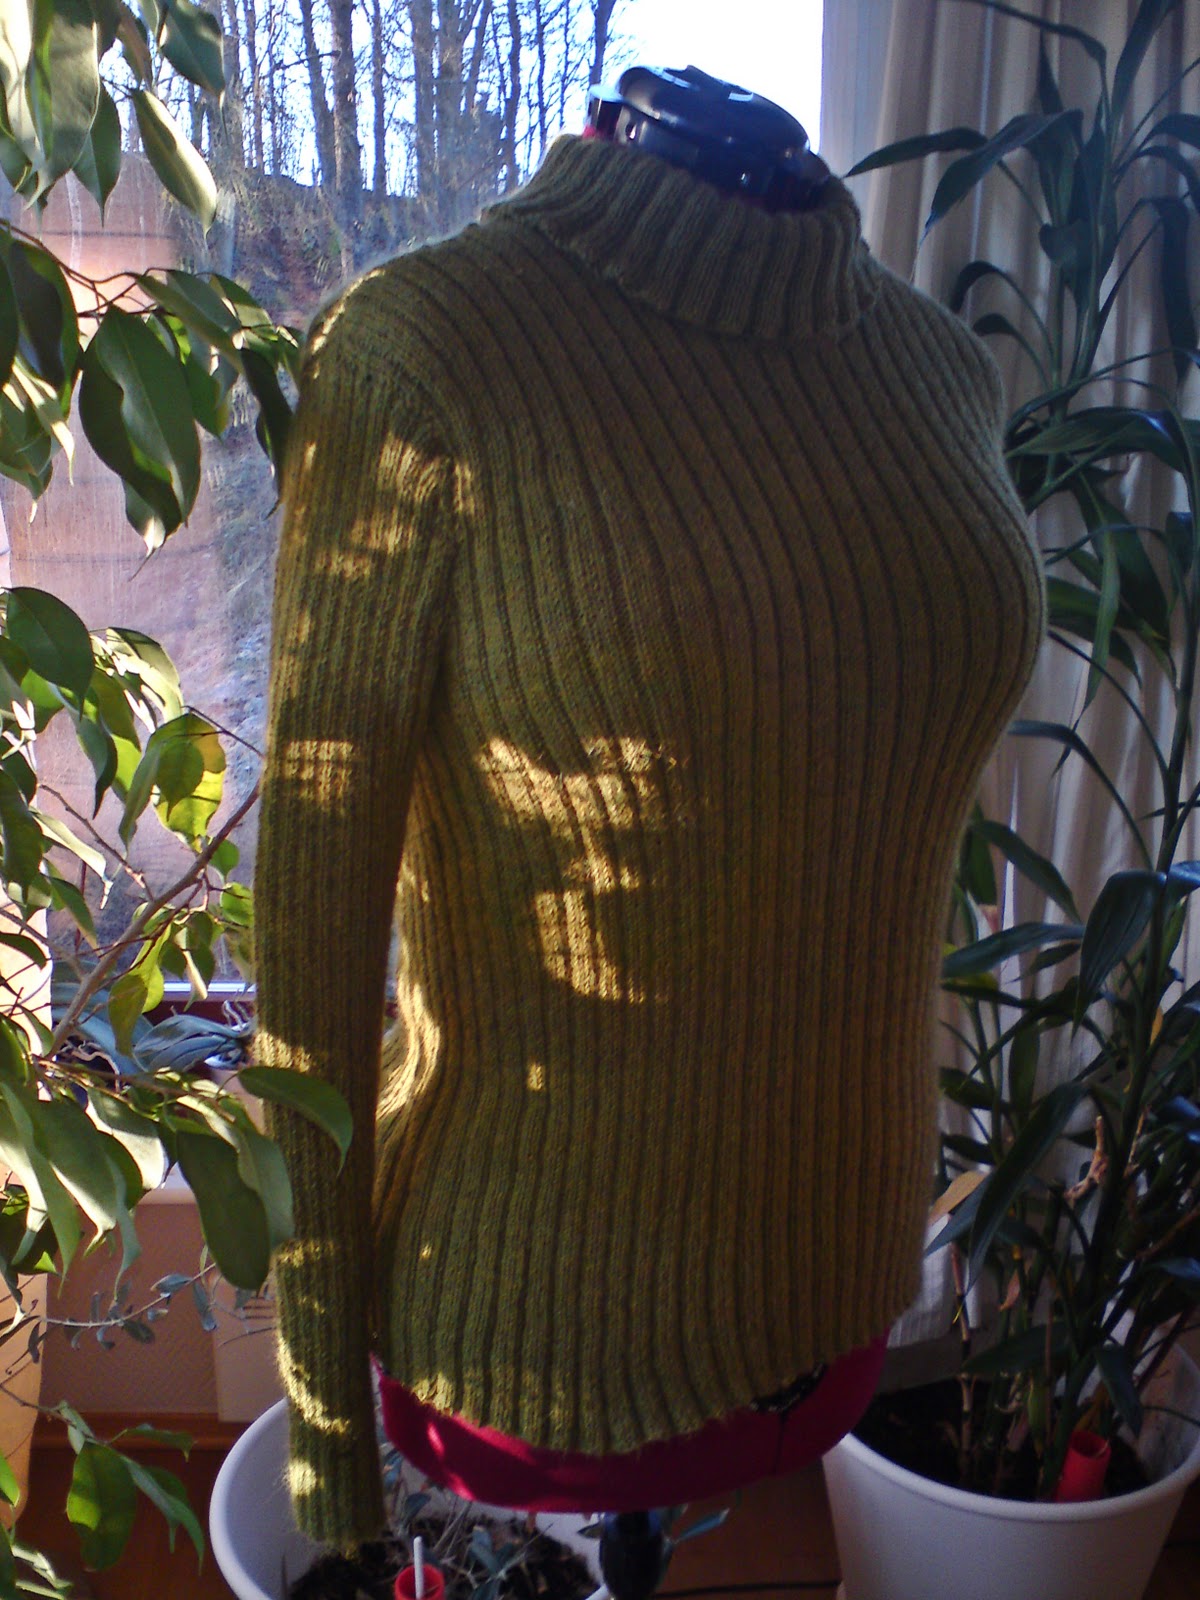 Things I love to make: Alpaca sweater